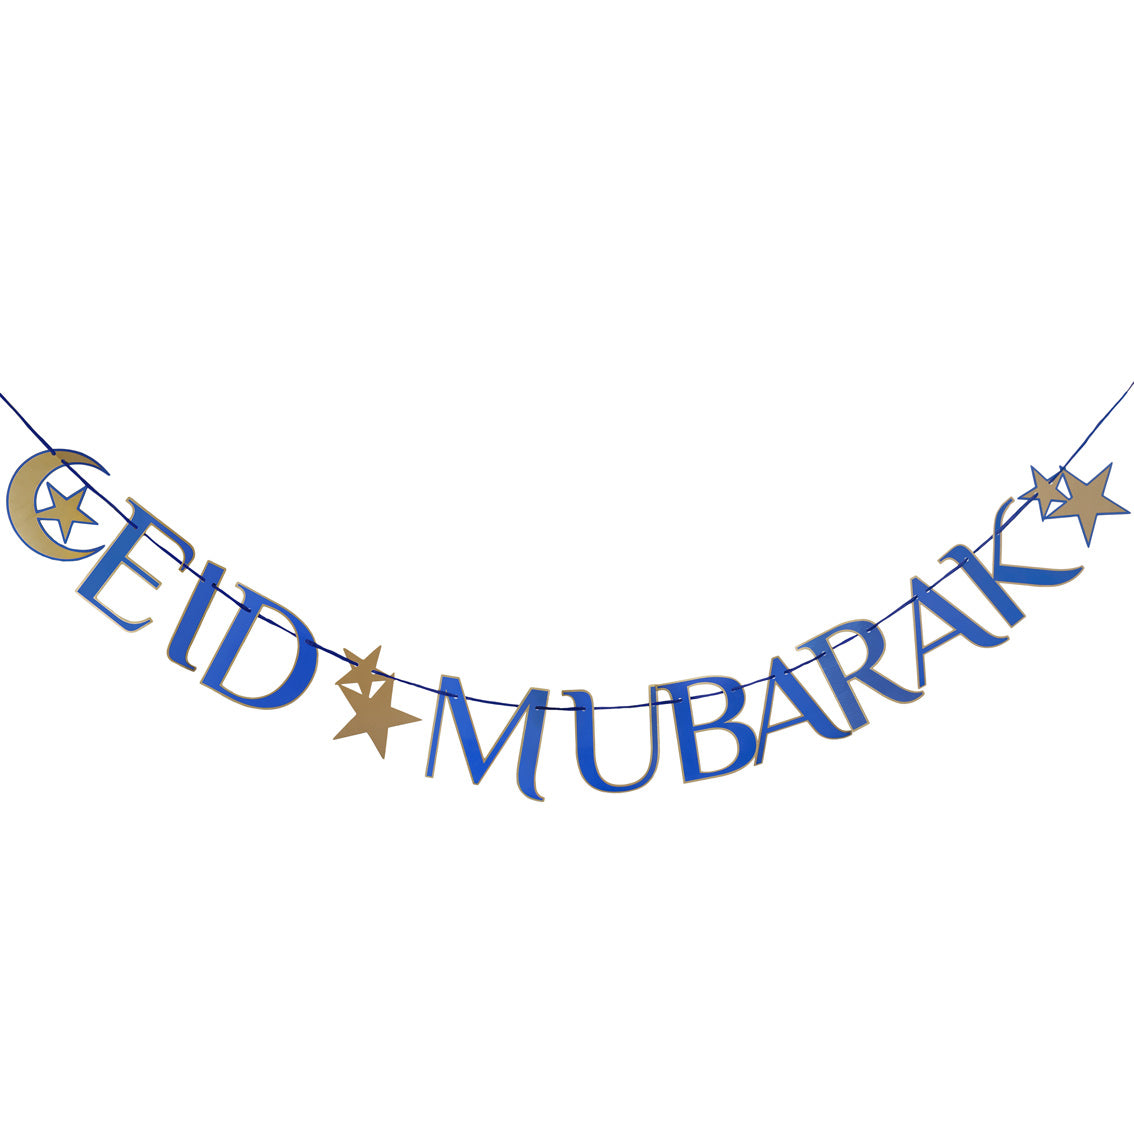 Eid Mubarak Paper Garland 3m by penny black